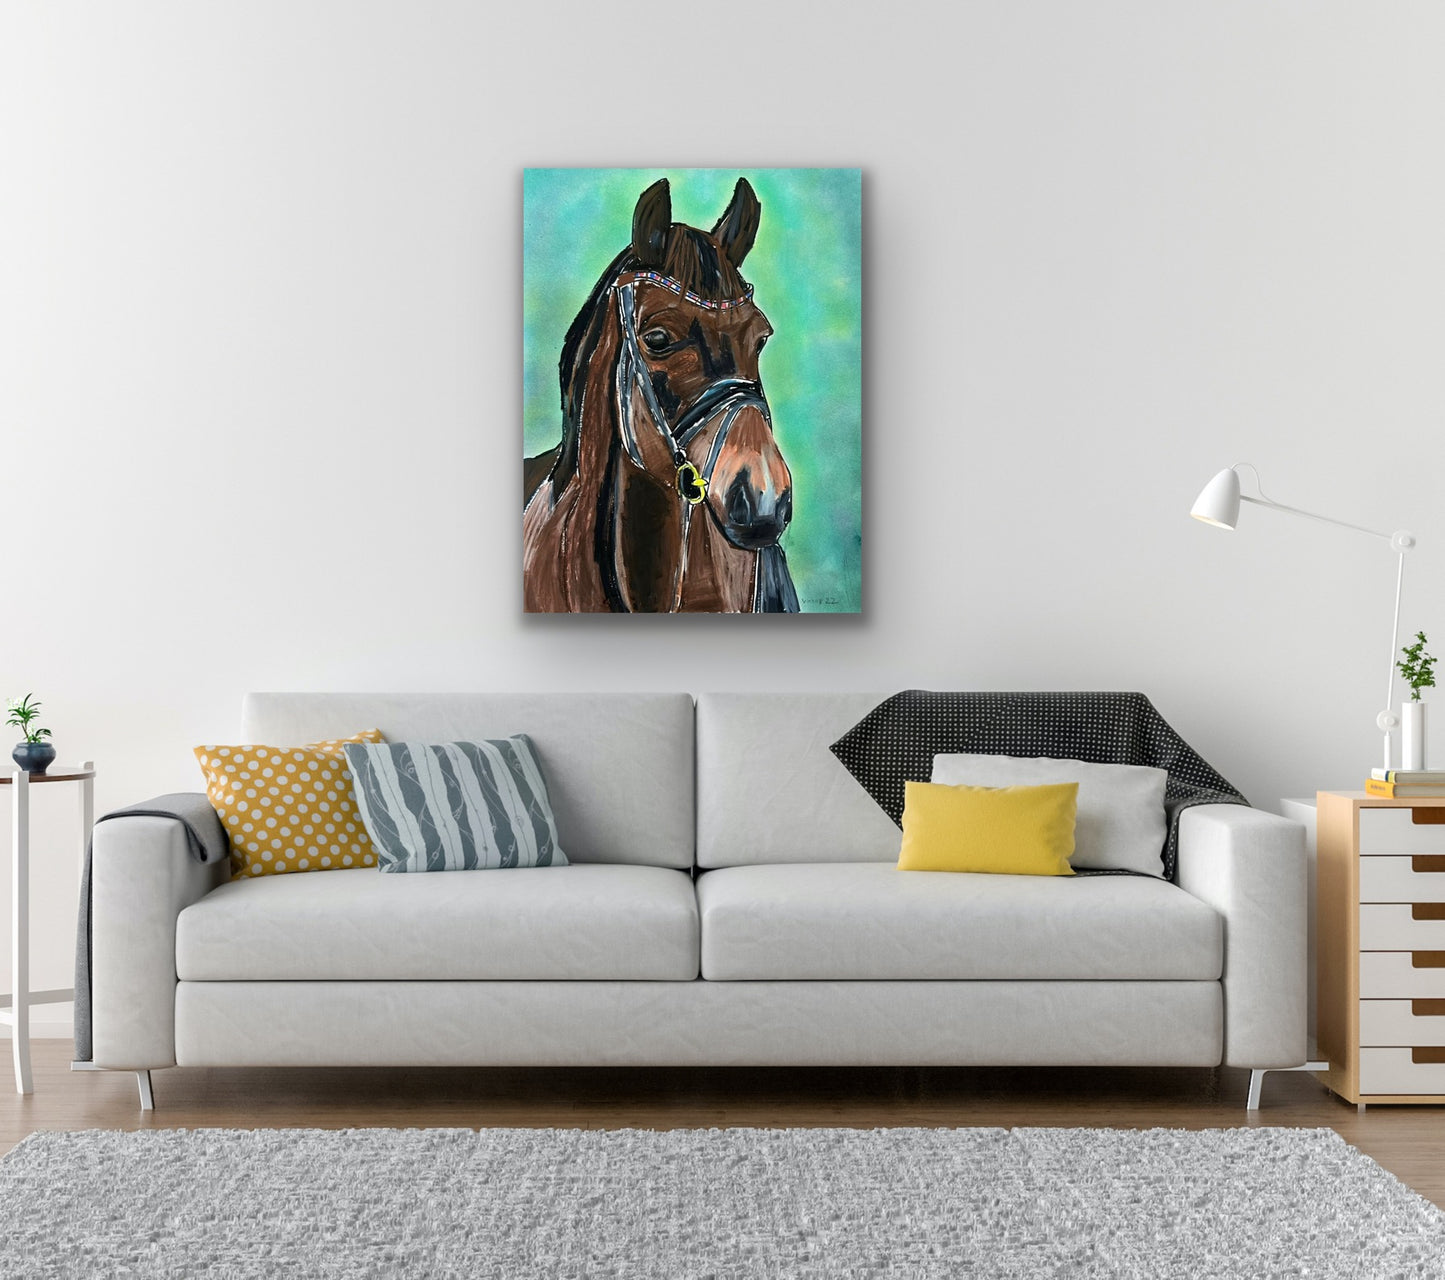 Awarded  Horse  - fine prints of original artwork